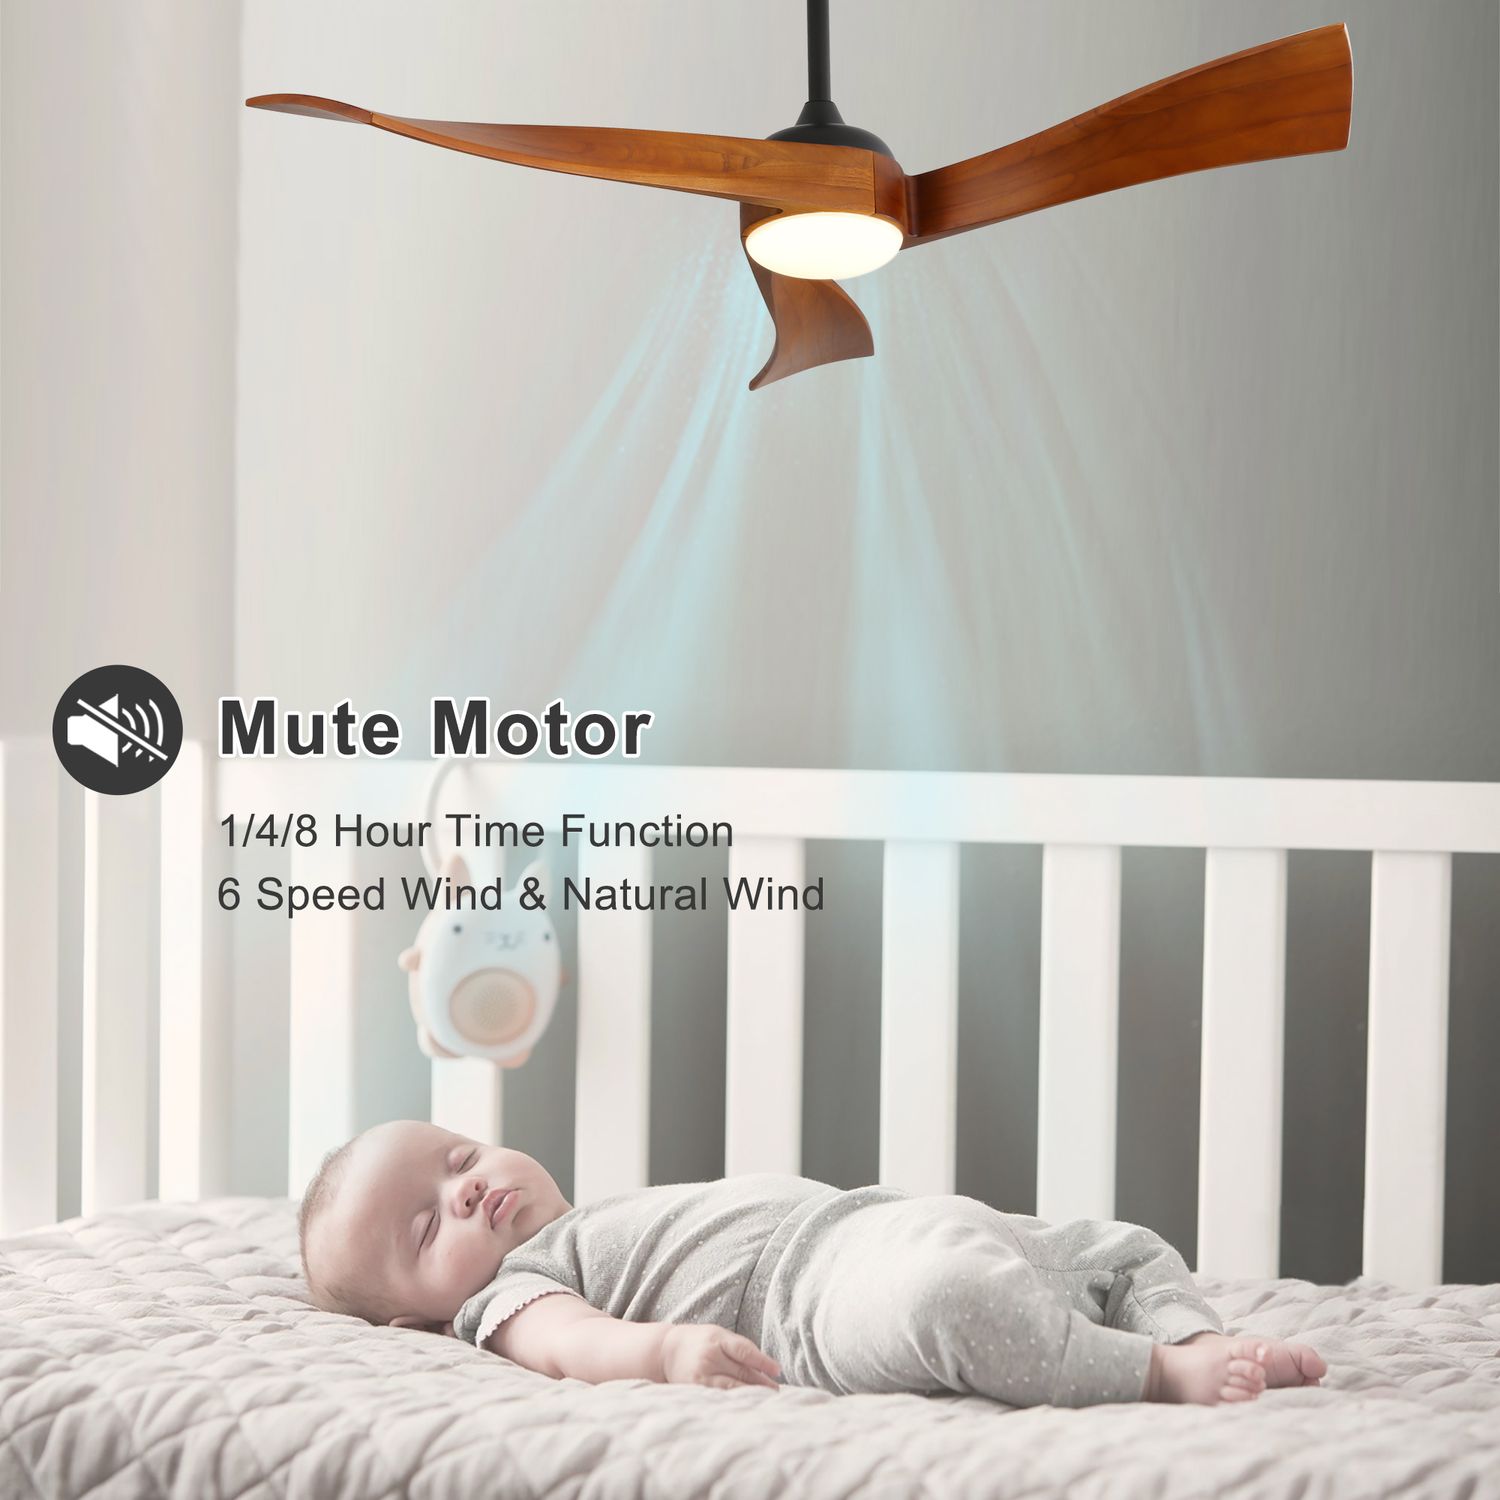 Mute motor of KBS Solid Wood Ceiling Fan With Light